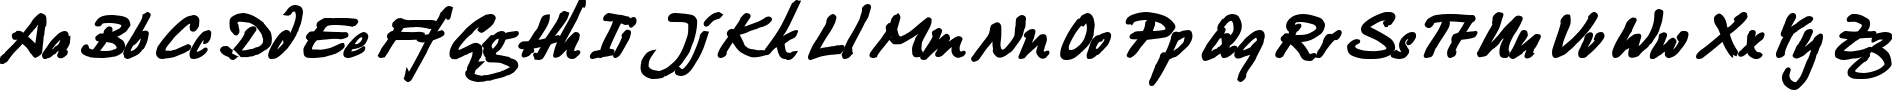 Пример написания английского алфавита шрифтом Juergen Bold Kursiv